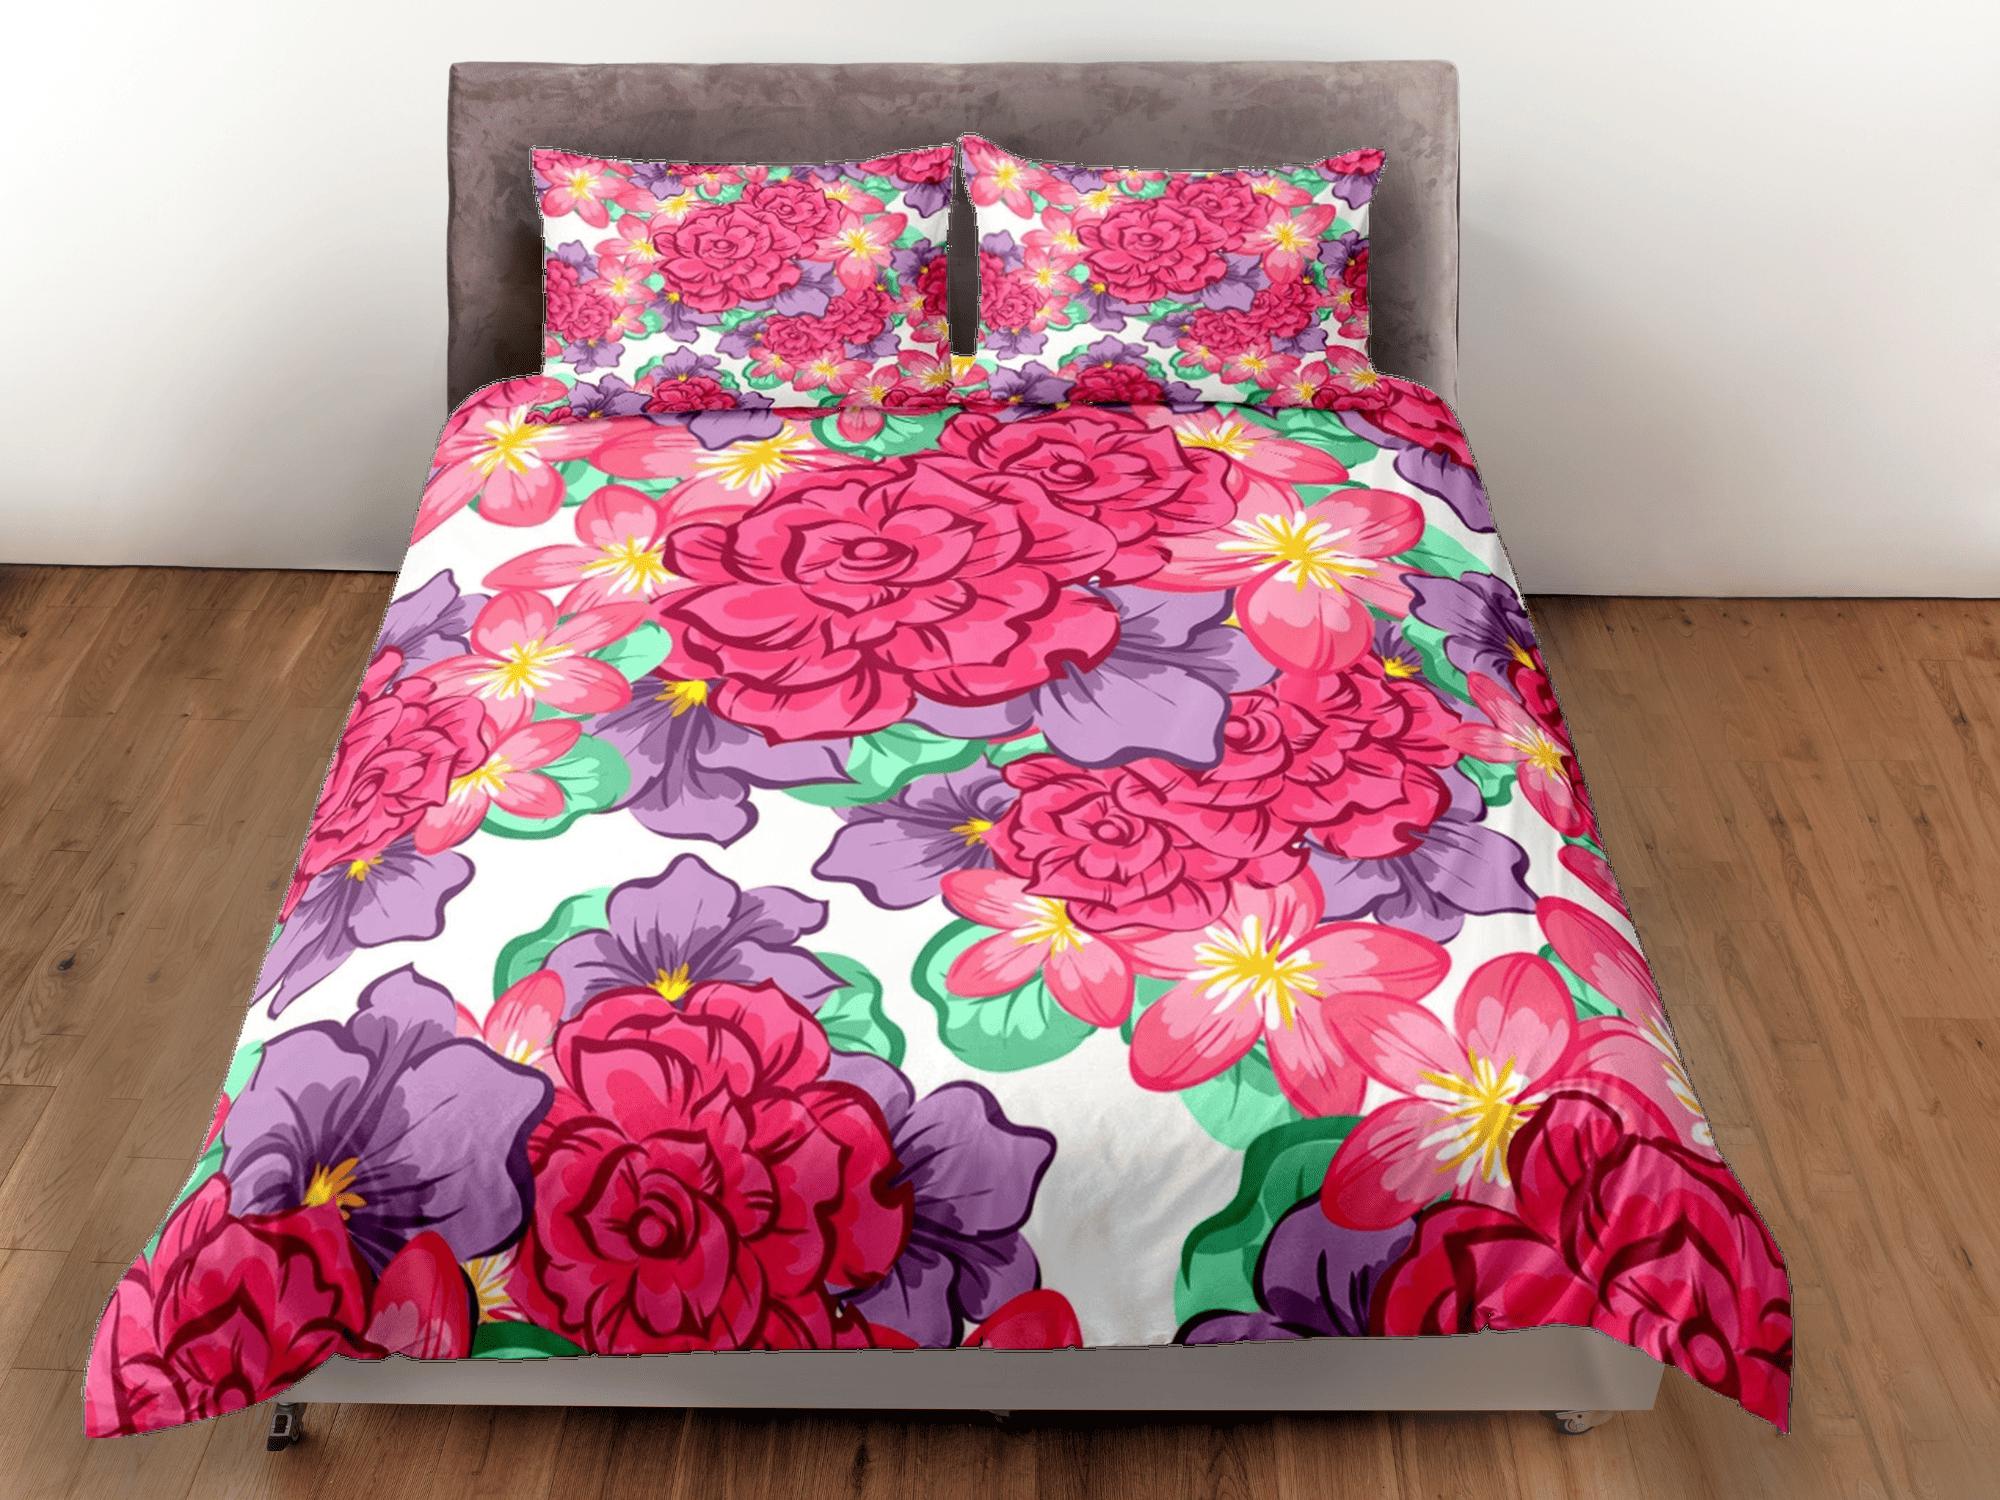 daintyduvet Pink floral bedding, unique adult duvet cover queen, king, boho duvet, designer bedding, aesthetic bedding, maximalist decor full size bed